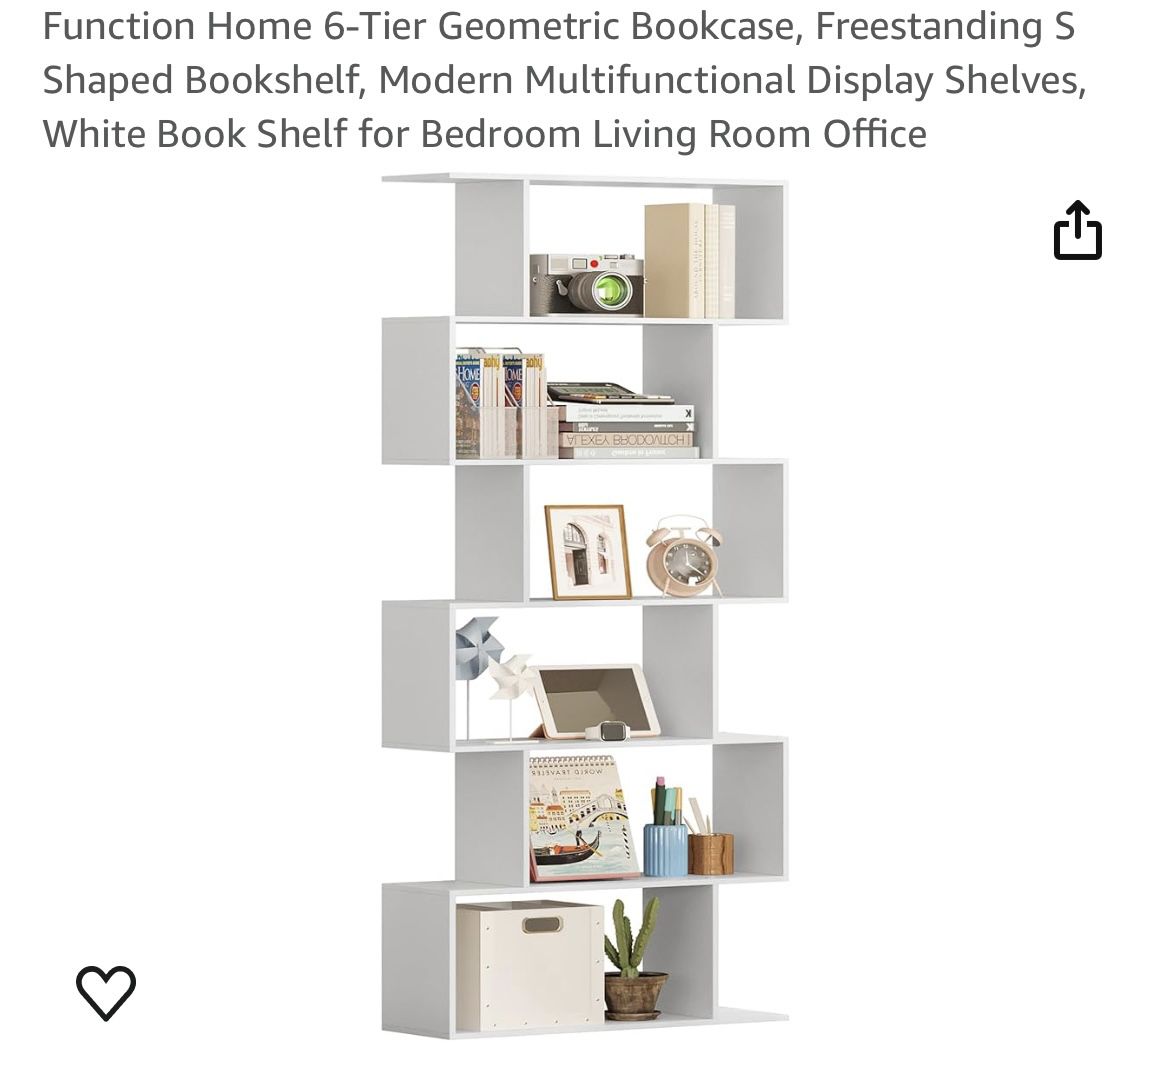  6-Tier Geometric Bookshelf, Modern Multifunctional